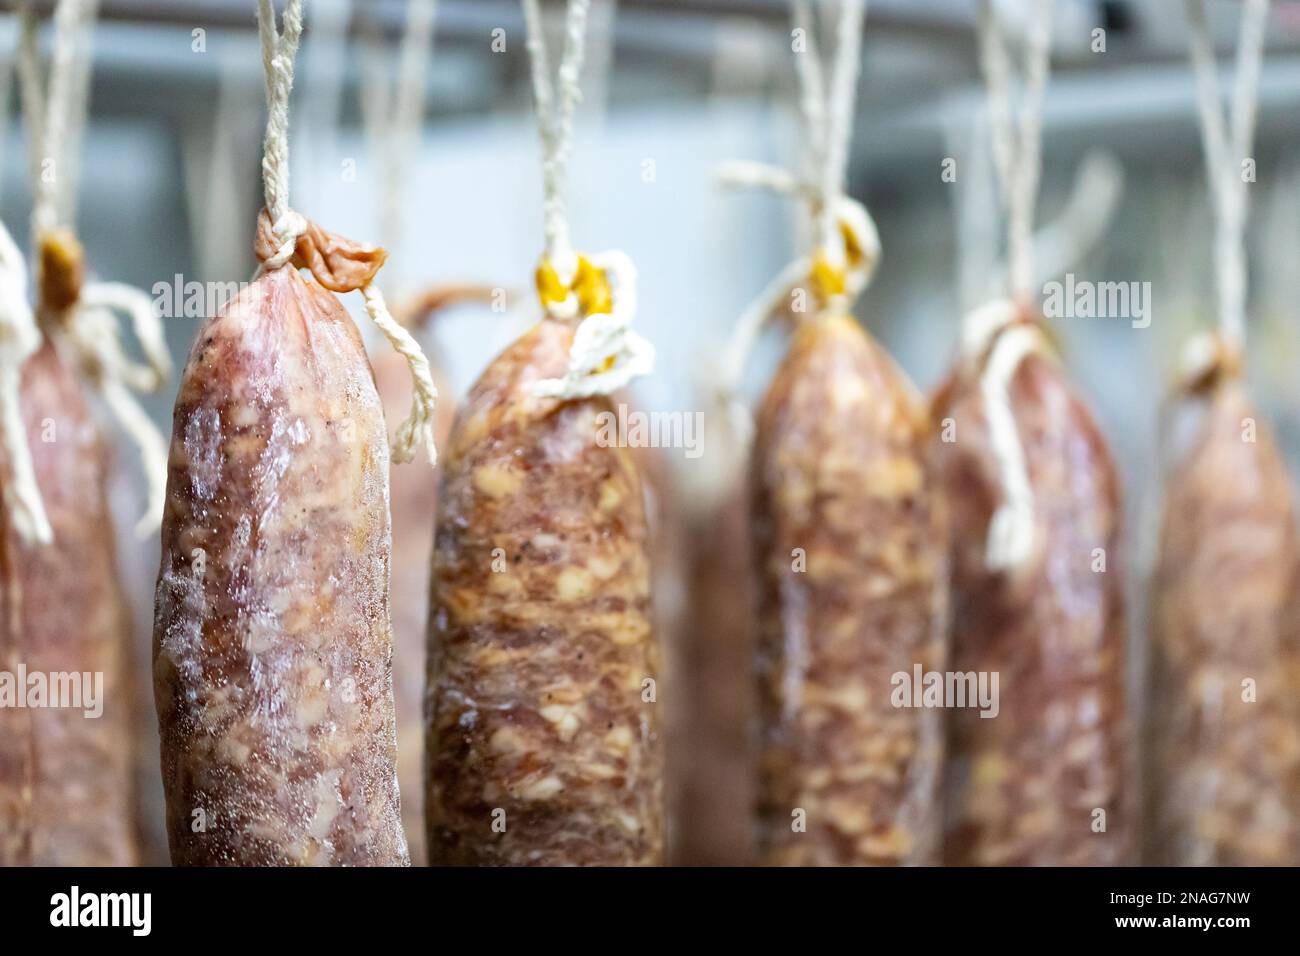 Llonganissa (cured & dried pork sausage) Stock Photo